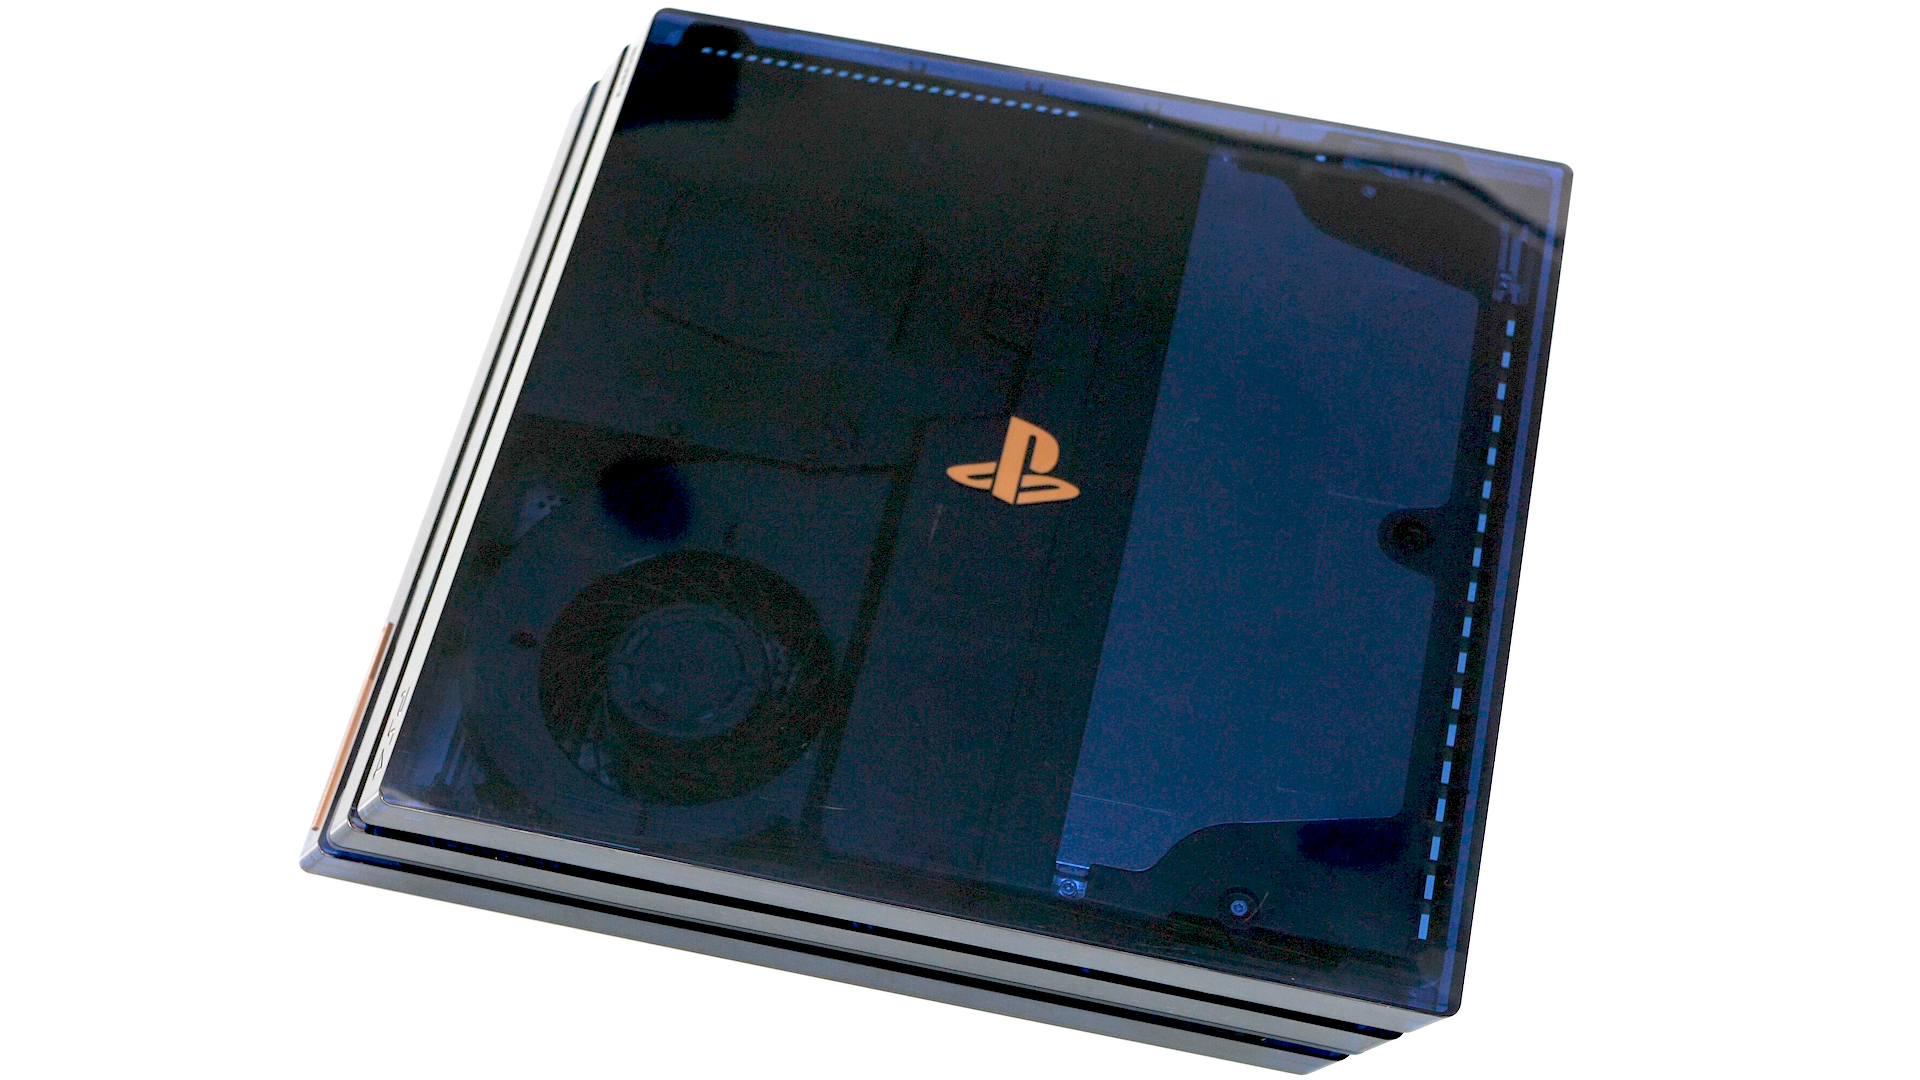 Sony 偷偷更新了PS4 Pro，比先前的機型「安靜」了一點點| T客邦